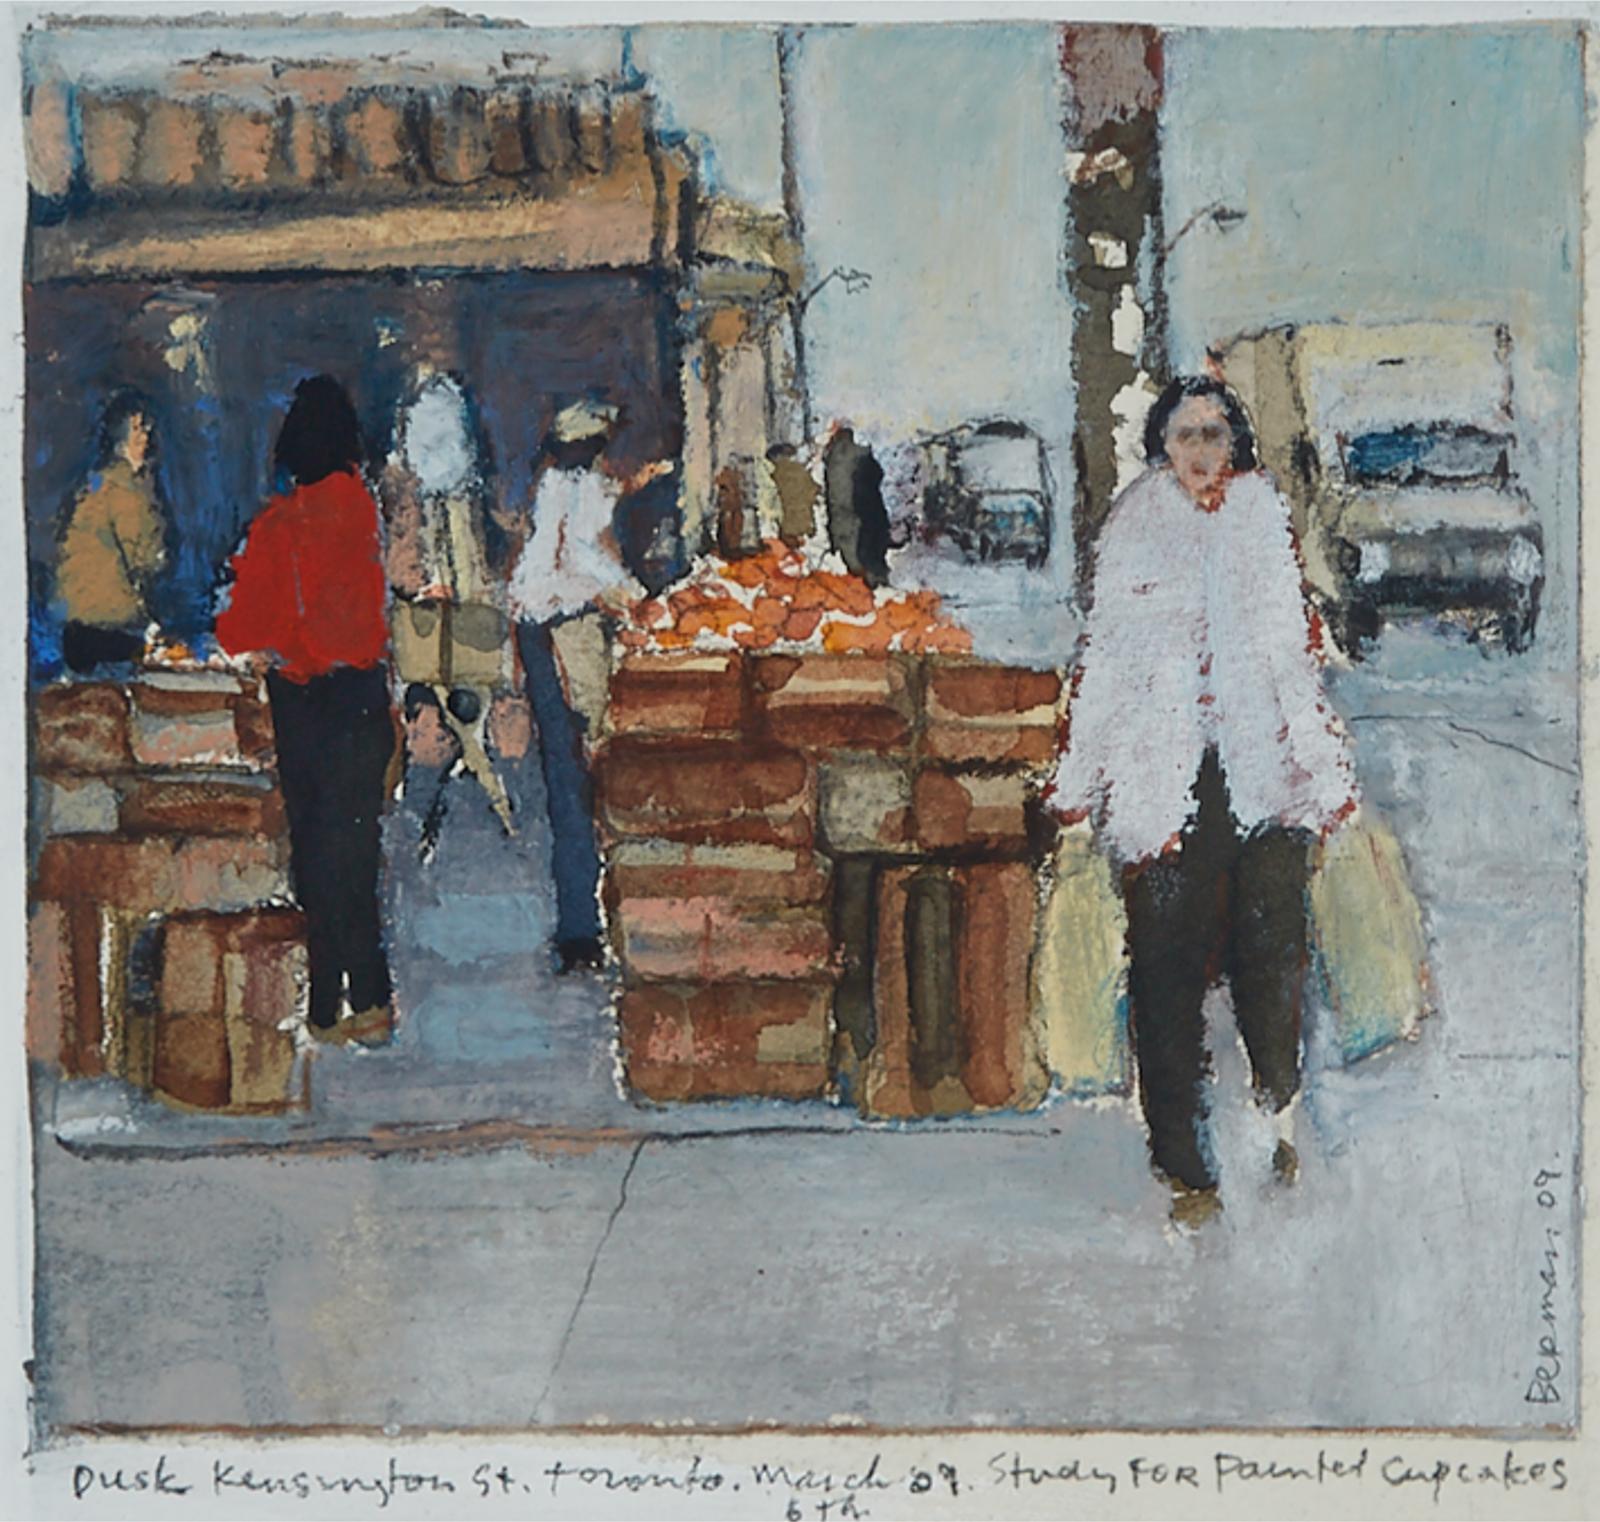 Rachel Berman (1947-2014) - Dusk Kensington St. Toronto, March 6th, '09, Study For Painted Cupcakes